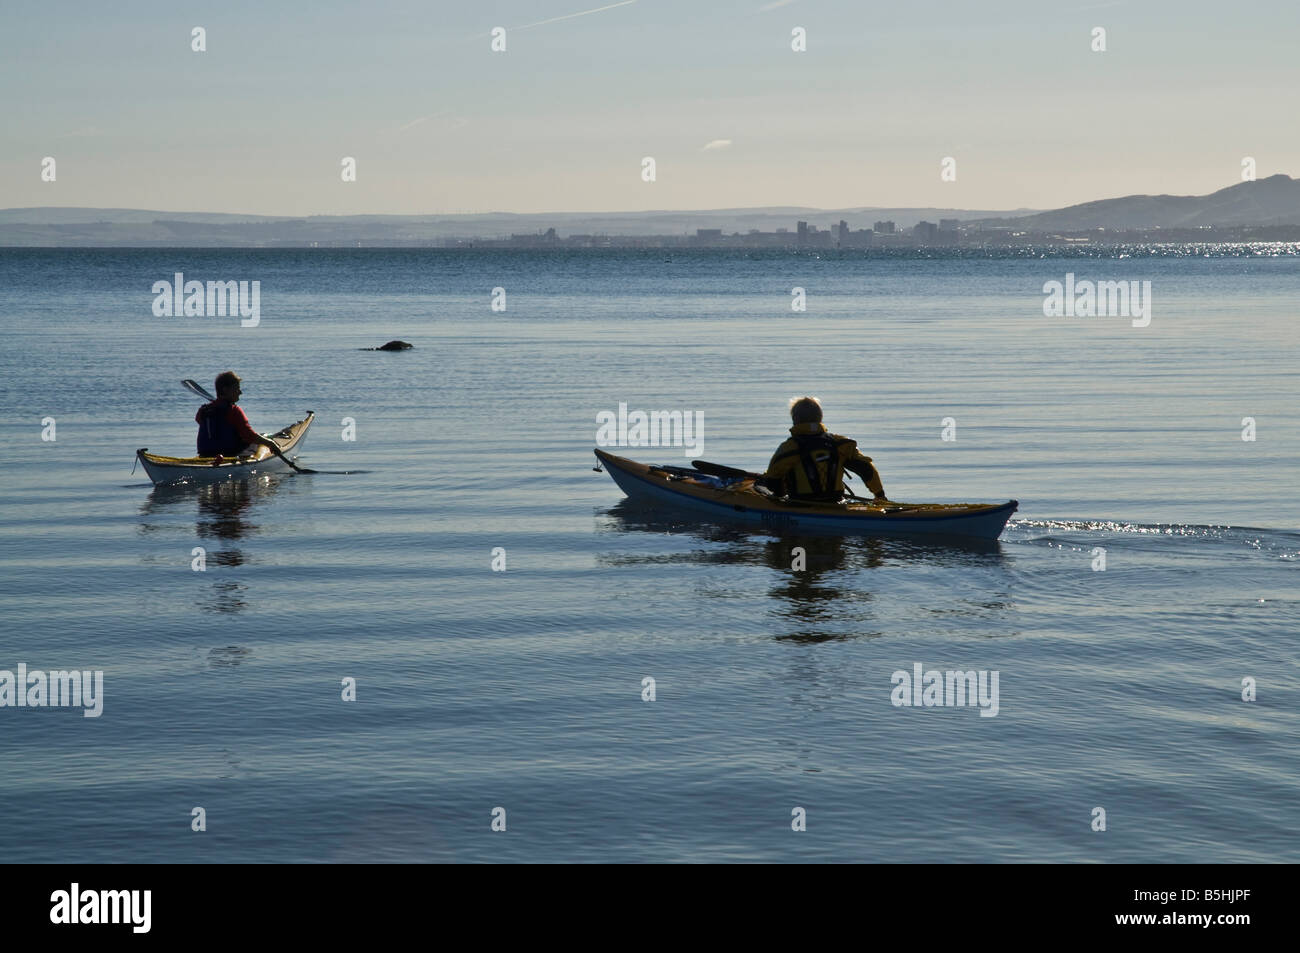 dh Kayak Küste Kanu WASSERSPORT KAJAKFAHREN FIFE SCHOTTLAND zwei Frauen Kanufahrer paddeln Boot auf See 2 UK Mädchen Paar Kajaks Stockfoto